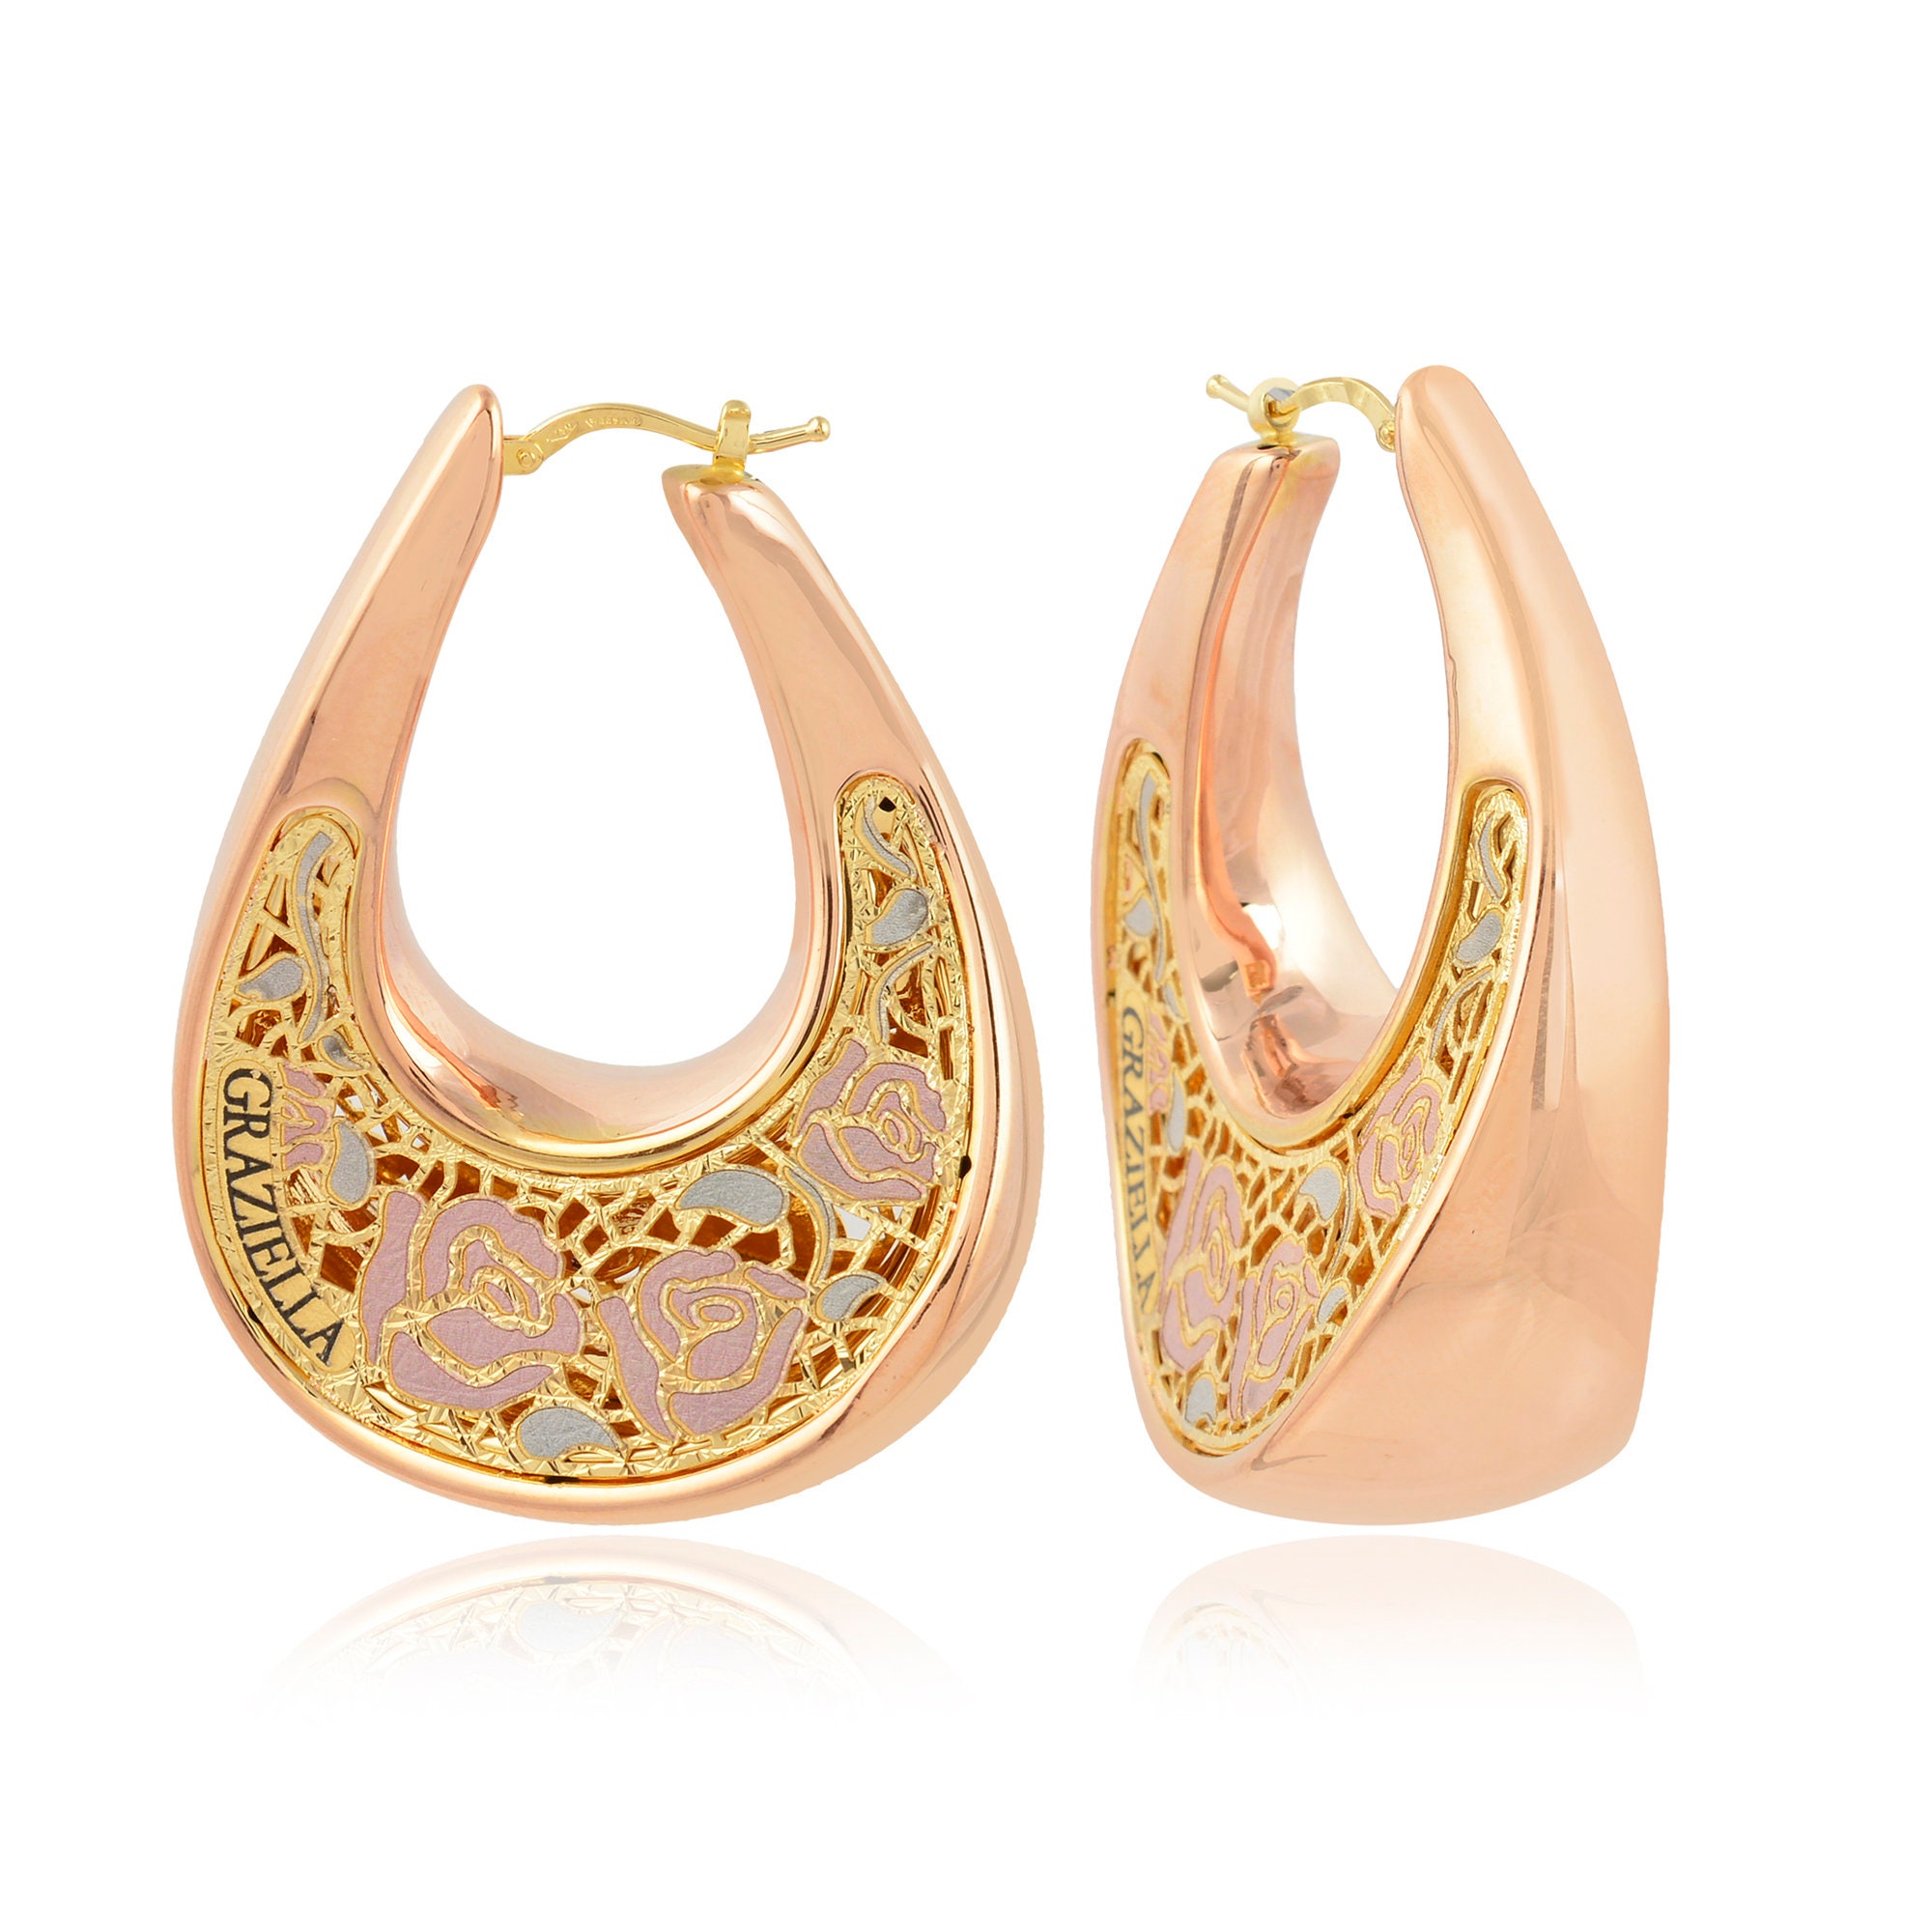 On Sale Solid 14K Yellow Gold Flower Enamel Name Hoop Earrings Handmade Fashion Fine Personalized Jewelry New Arrivals